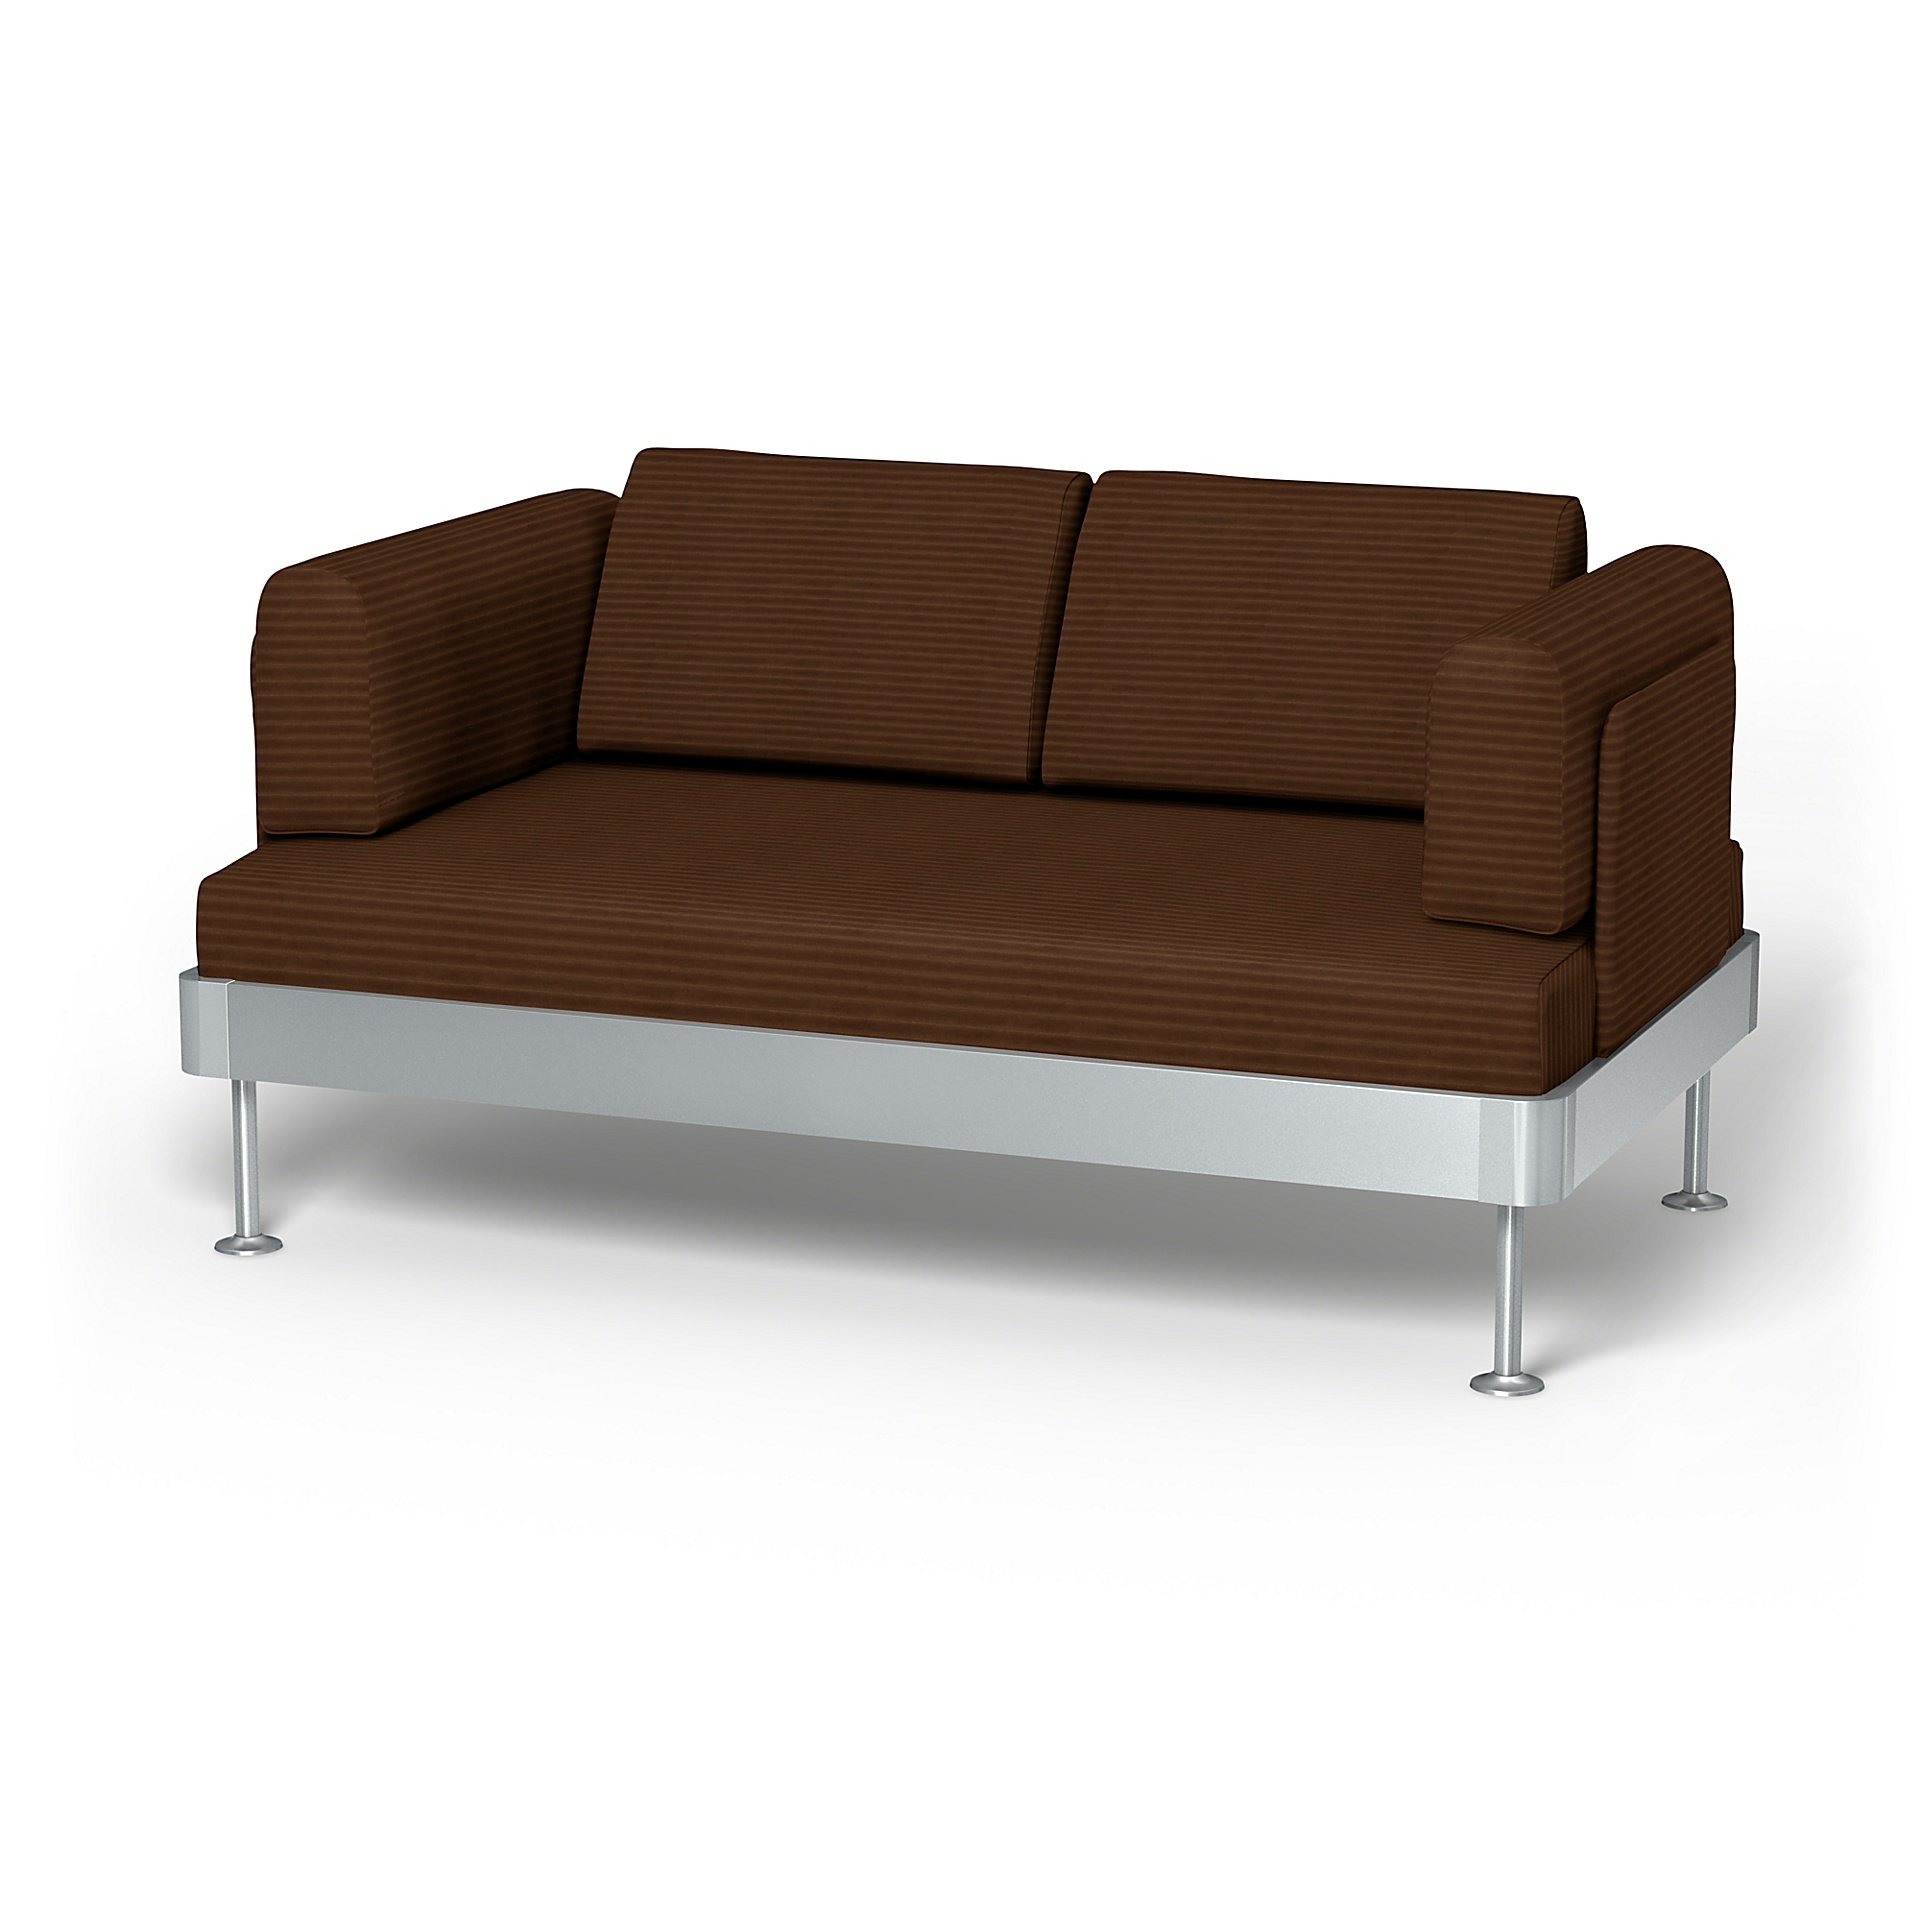 IKEA - Delaktig 2 Seater Sofa Cover, Chocolate Brown, Corduroy - Bemz